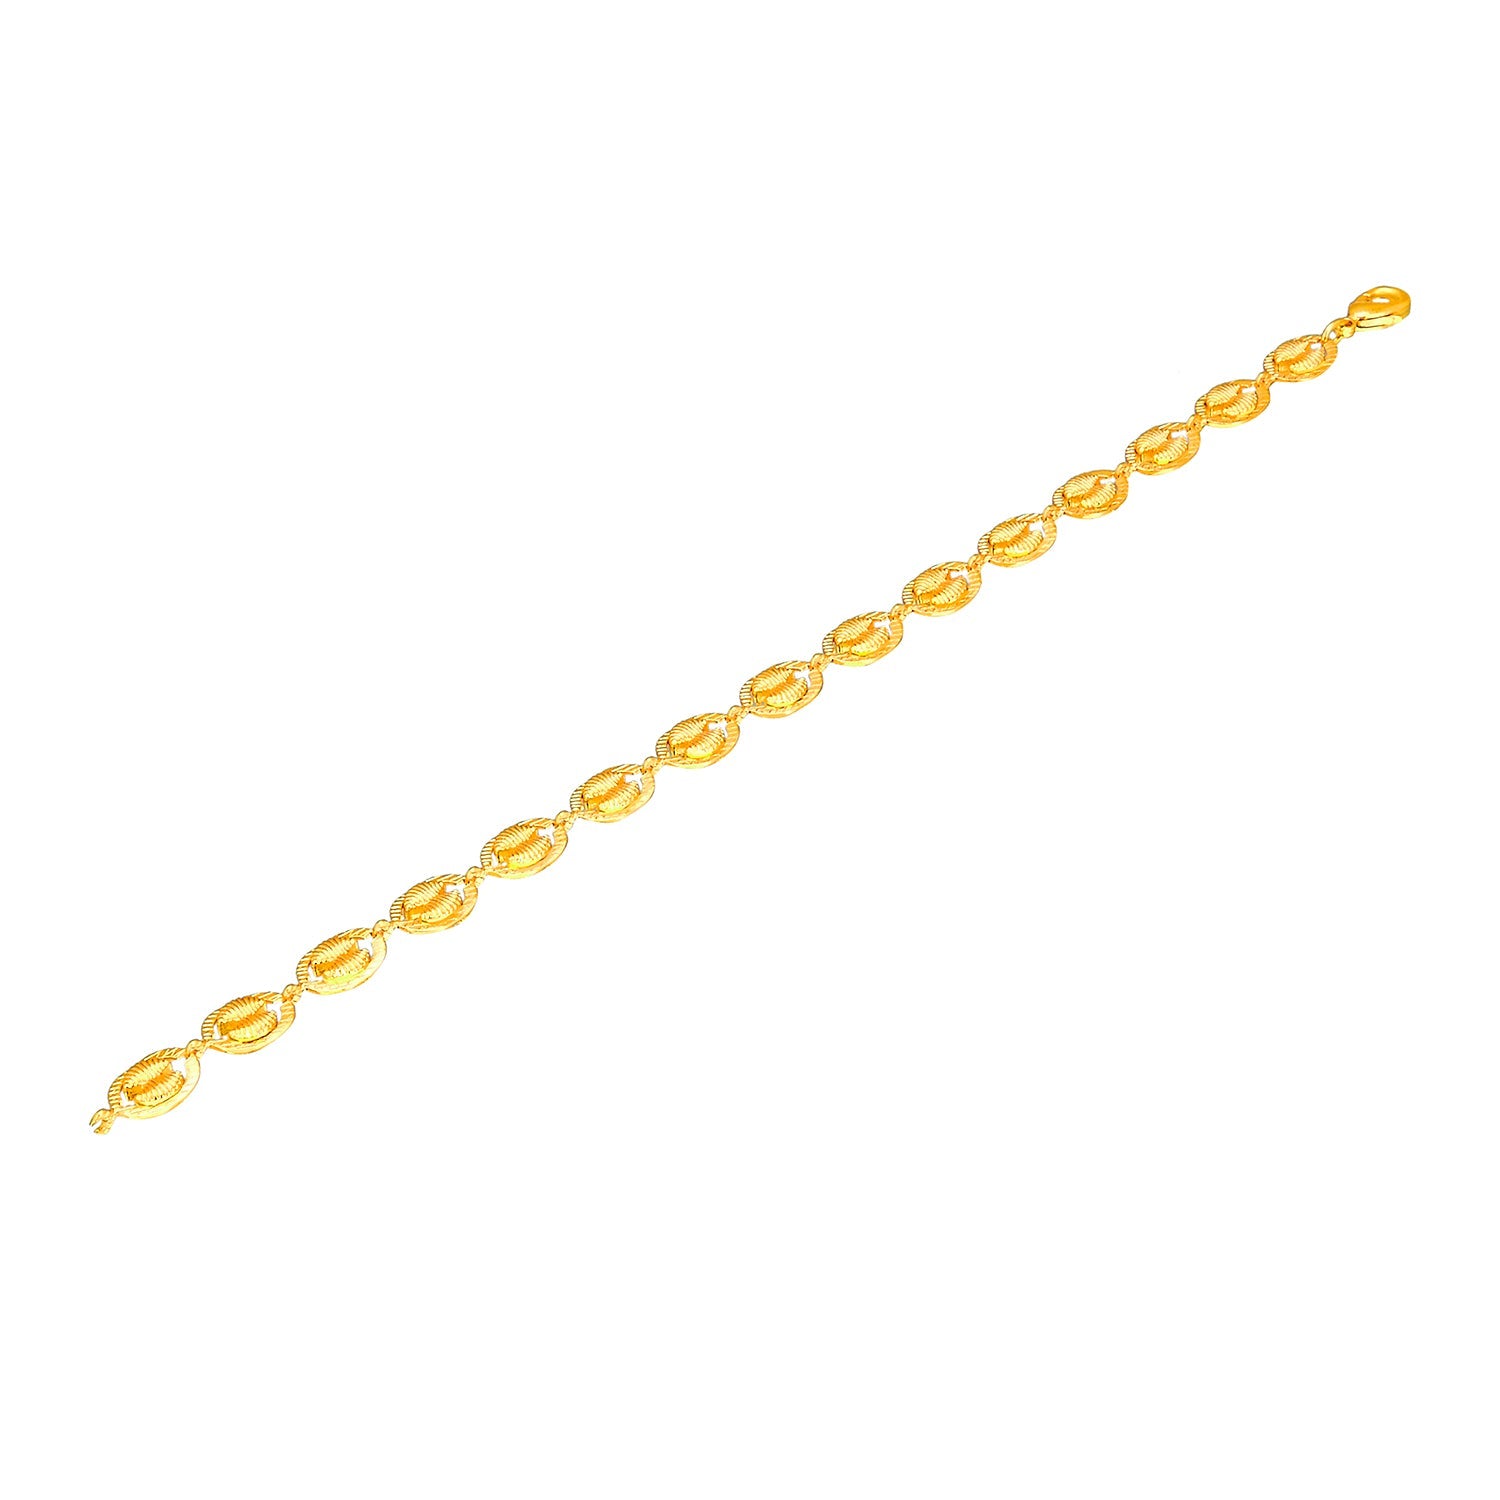 jewelry 24k gold plated Bangkok gold bracelet for women | Shopee Philippines